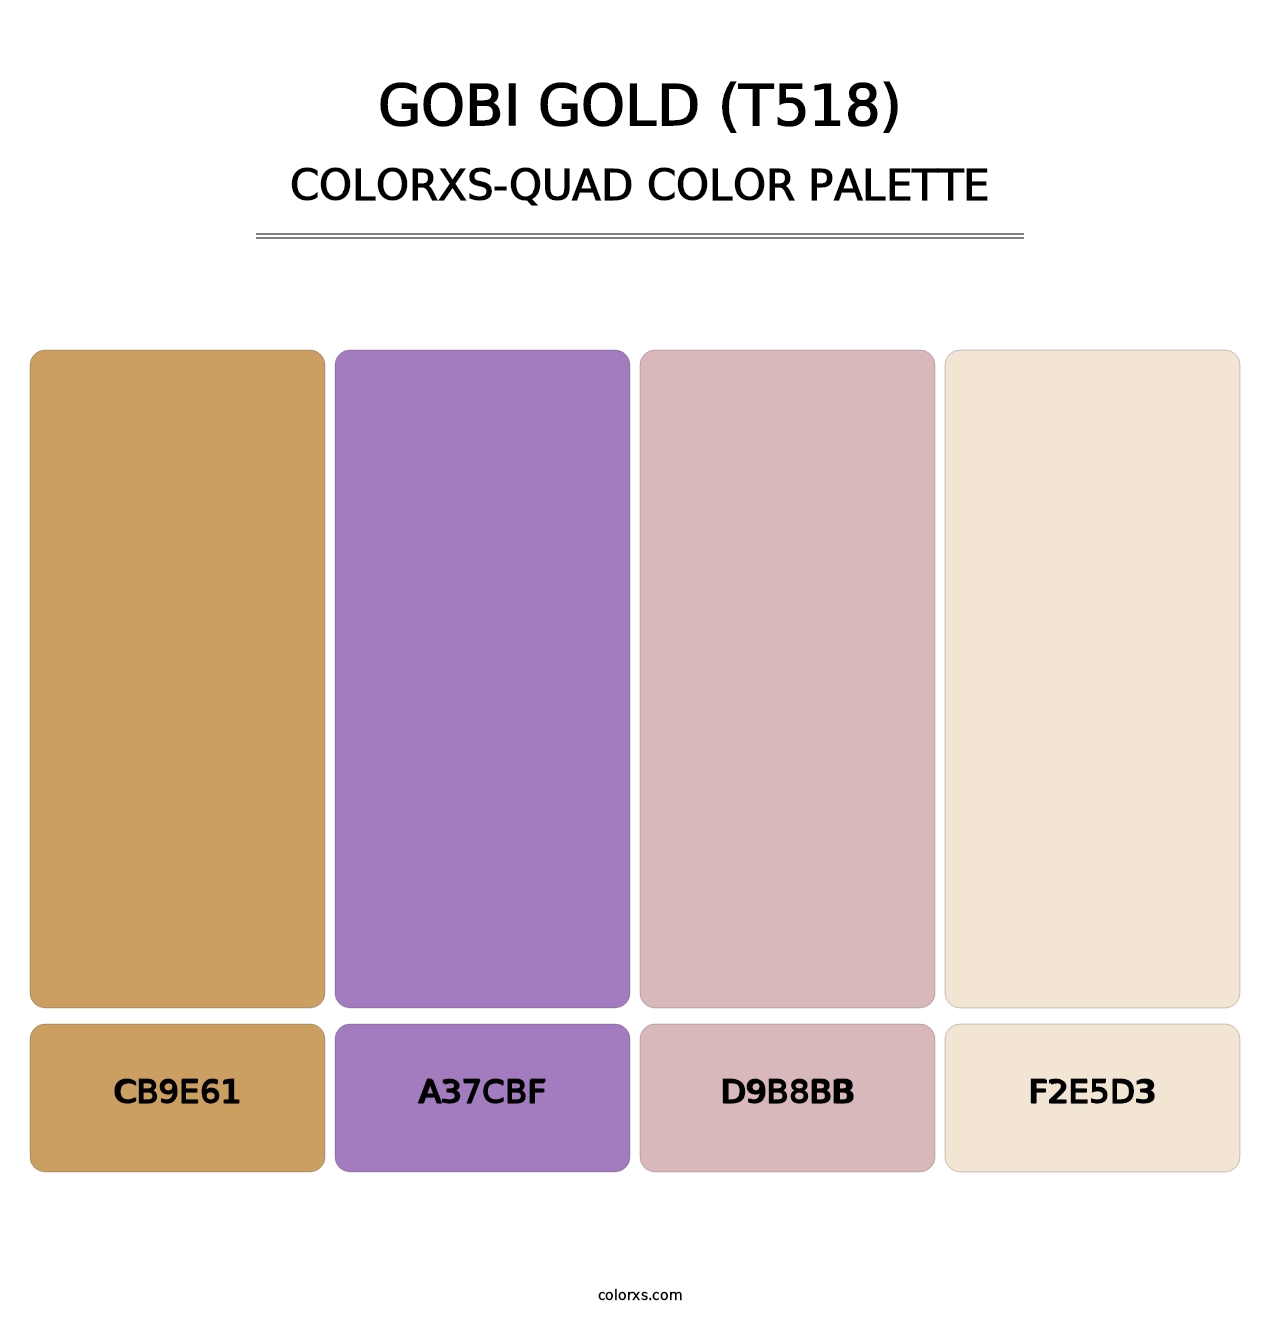 Gobi Gold (T518) - Colorxs Quad Palette